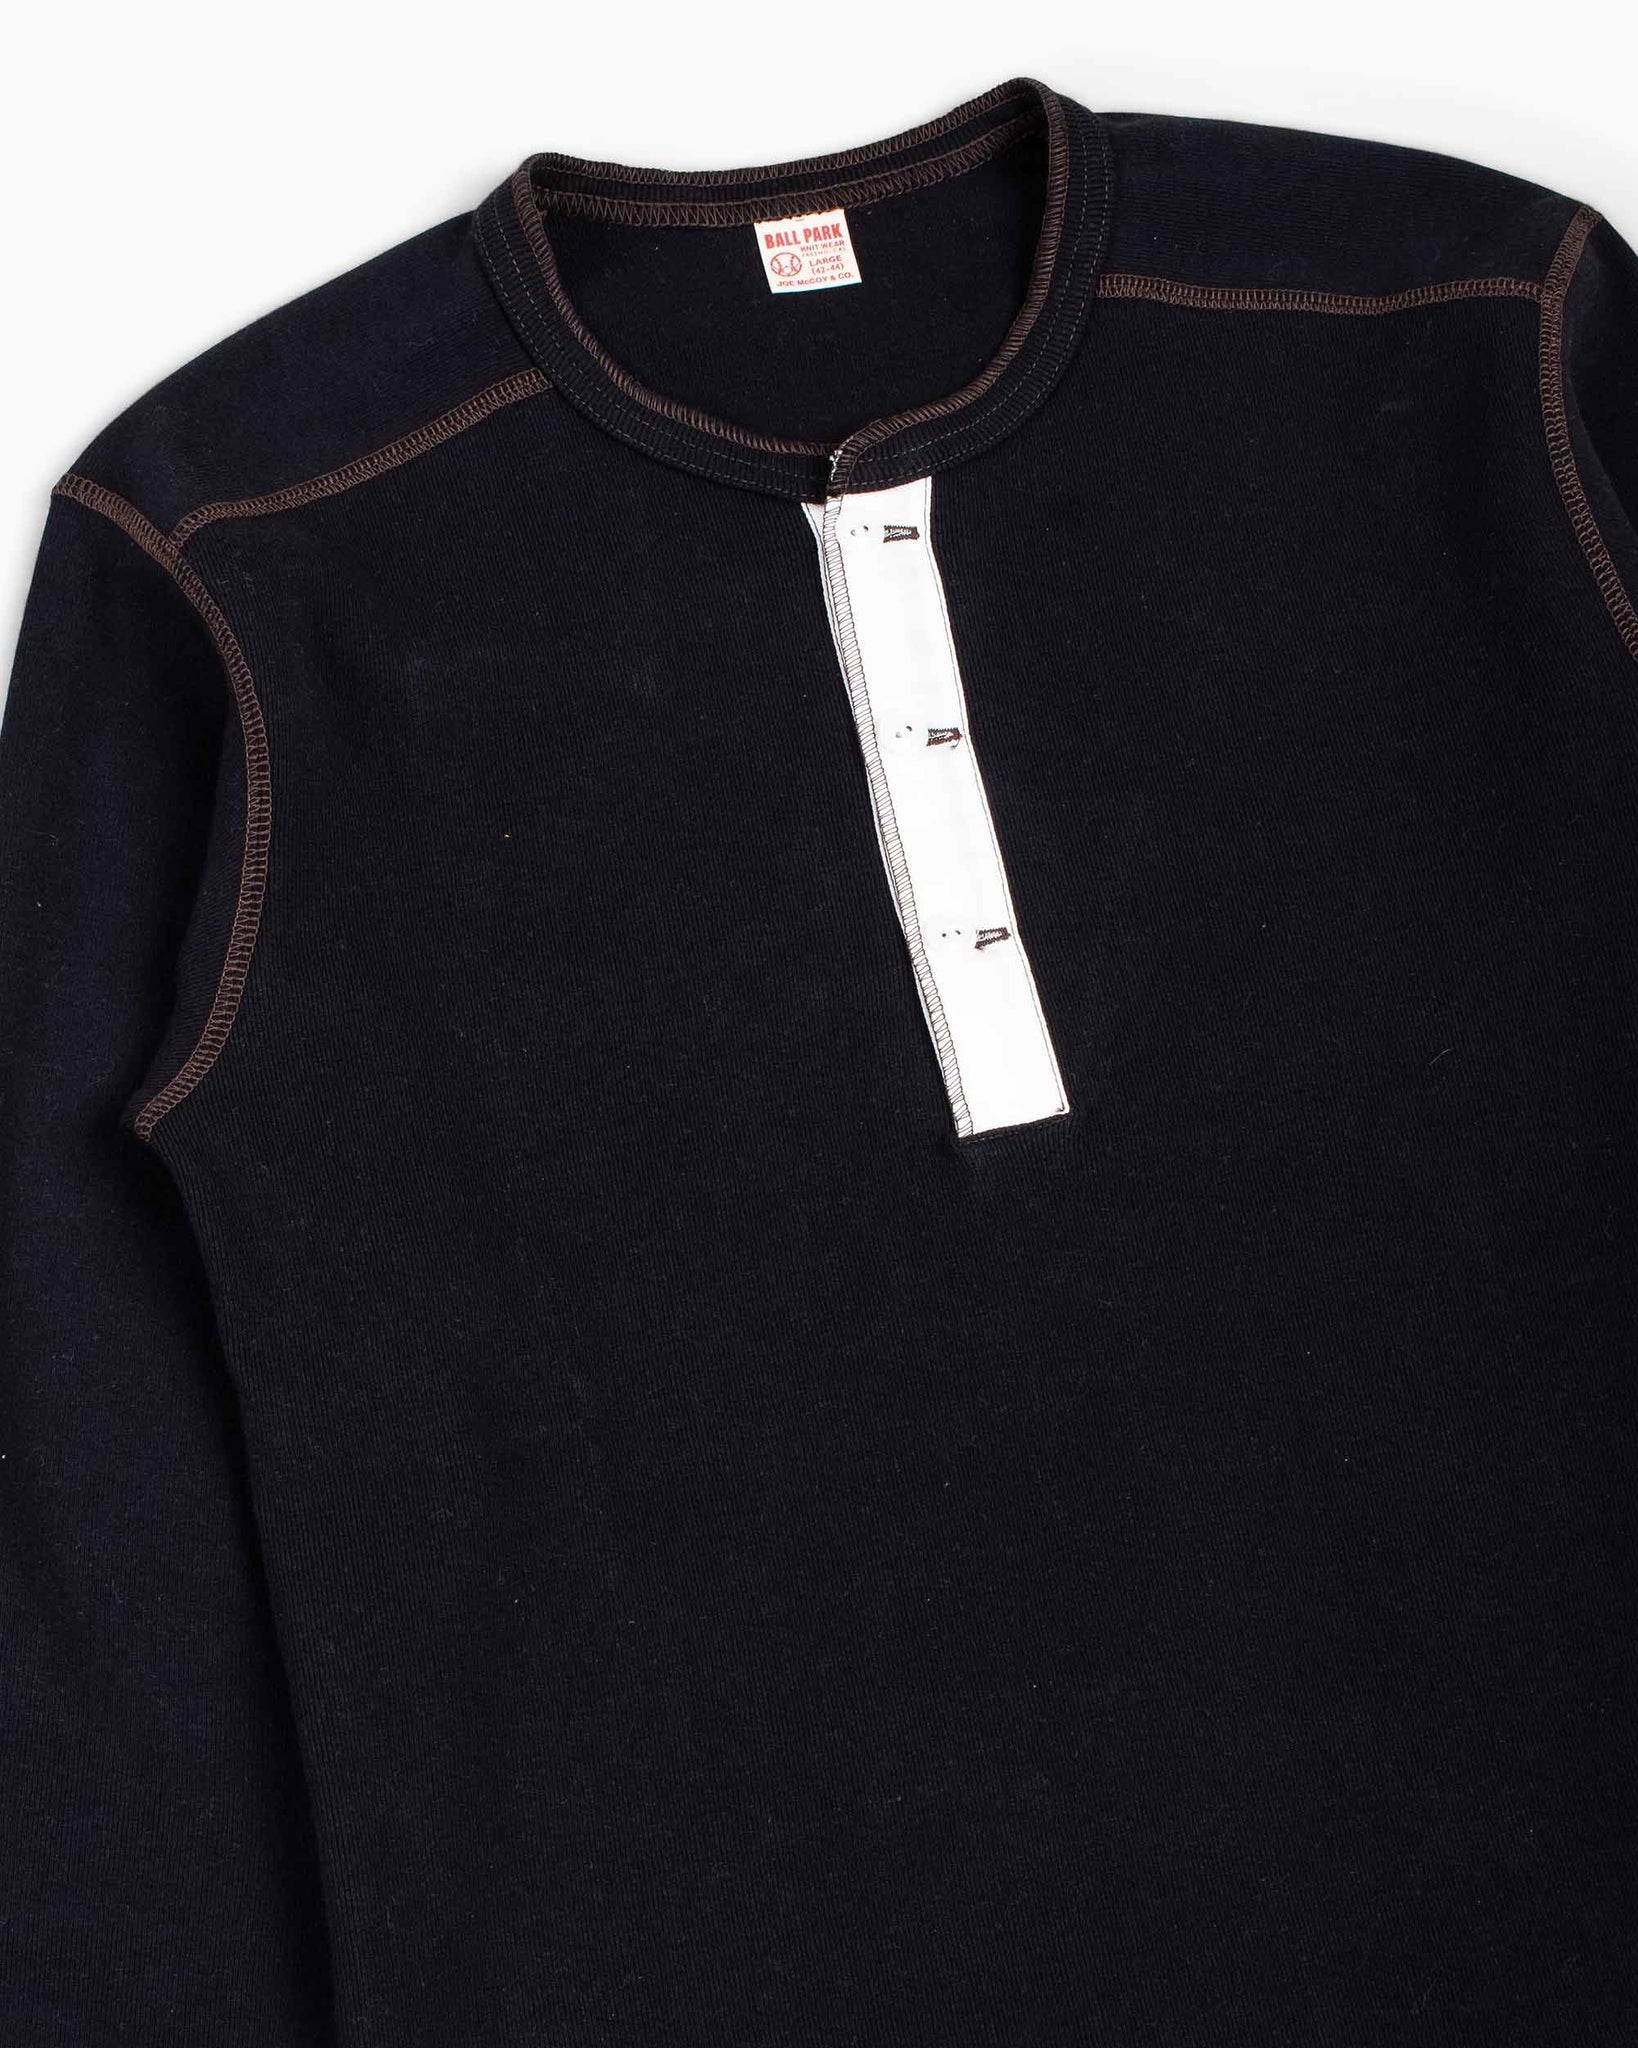 The Real McCoy's MC16117 Union Shirt Long Sleeve Black Details